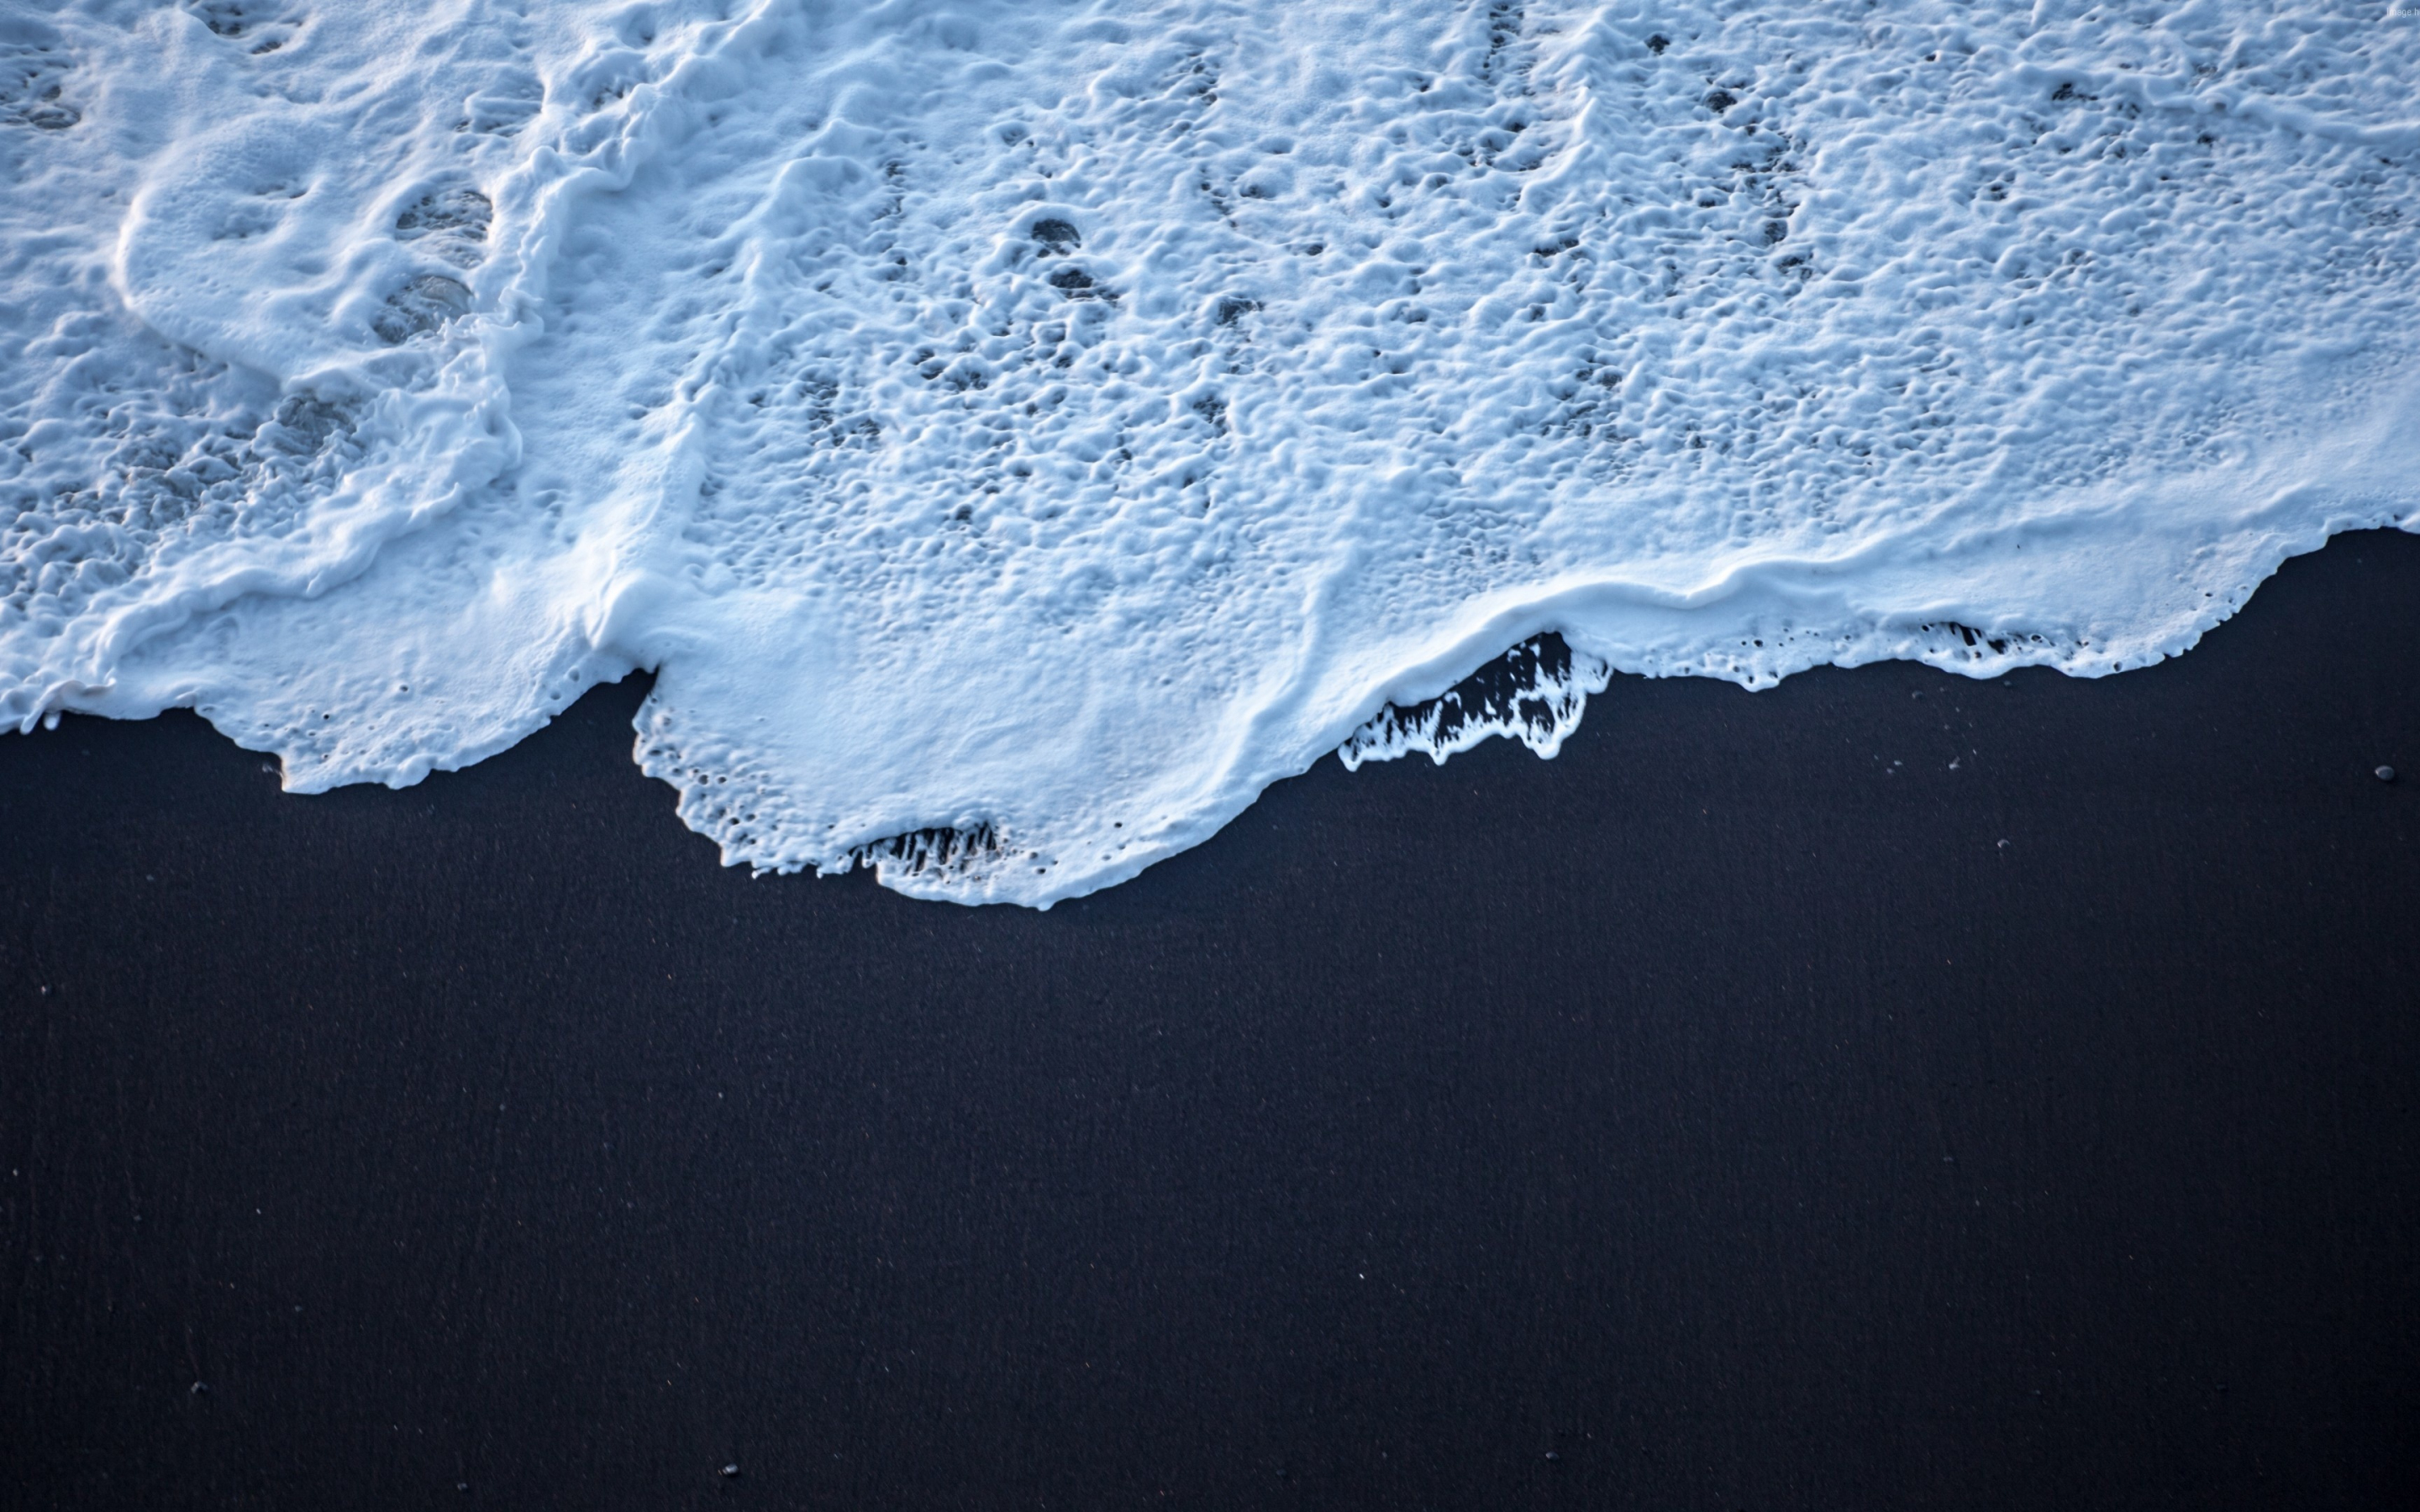 Ocean Wallpaper Images - Free Download on Freepik